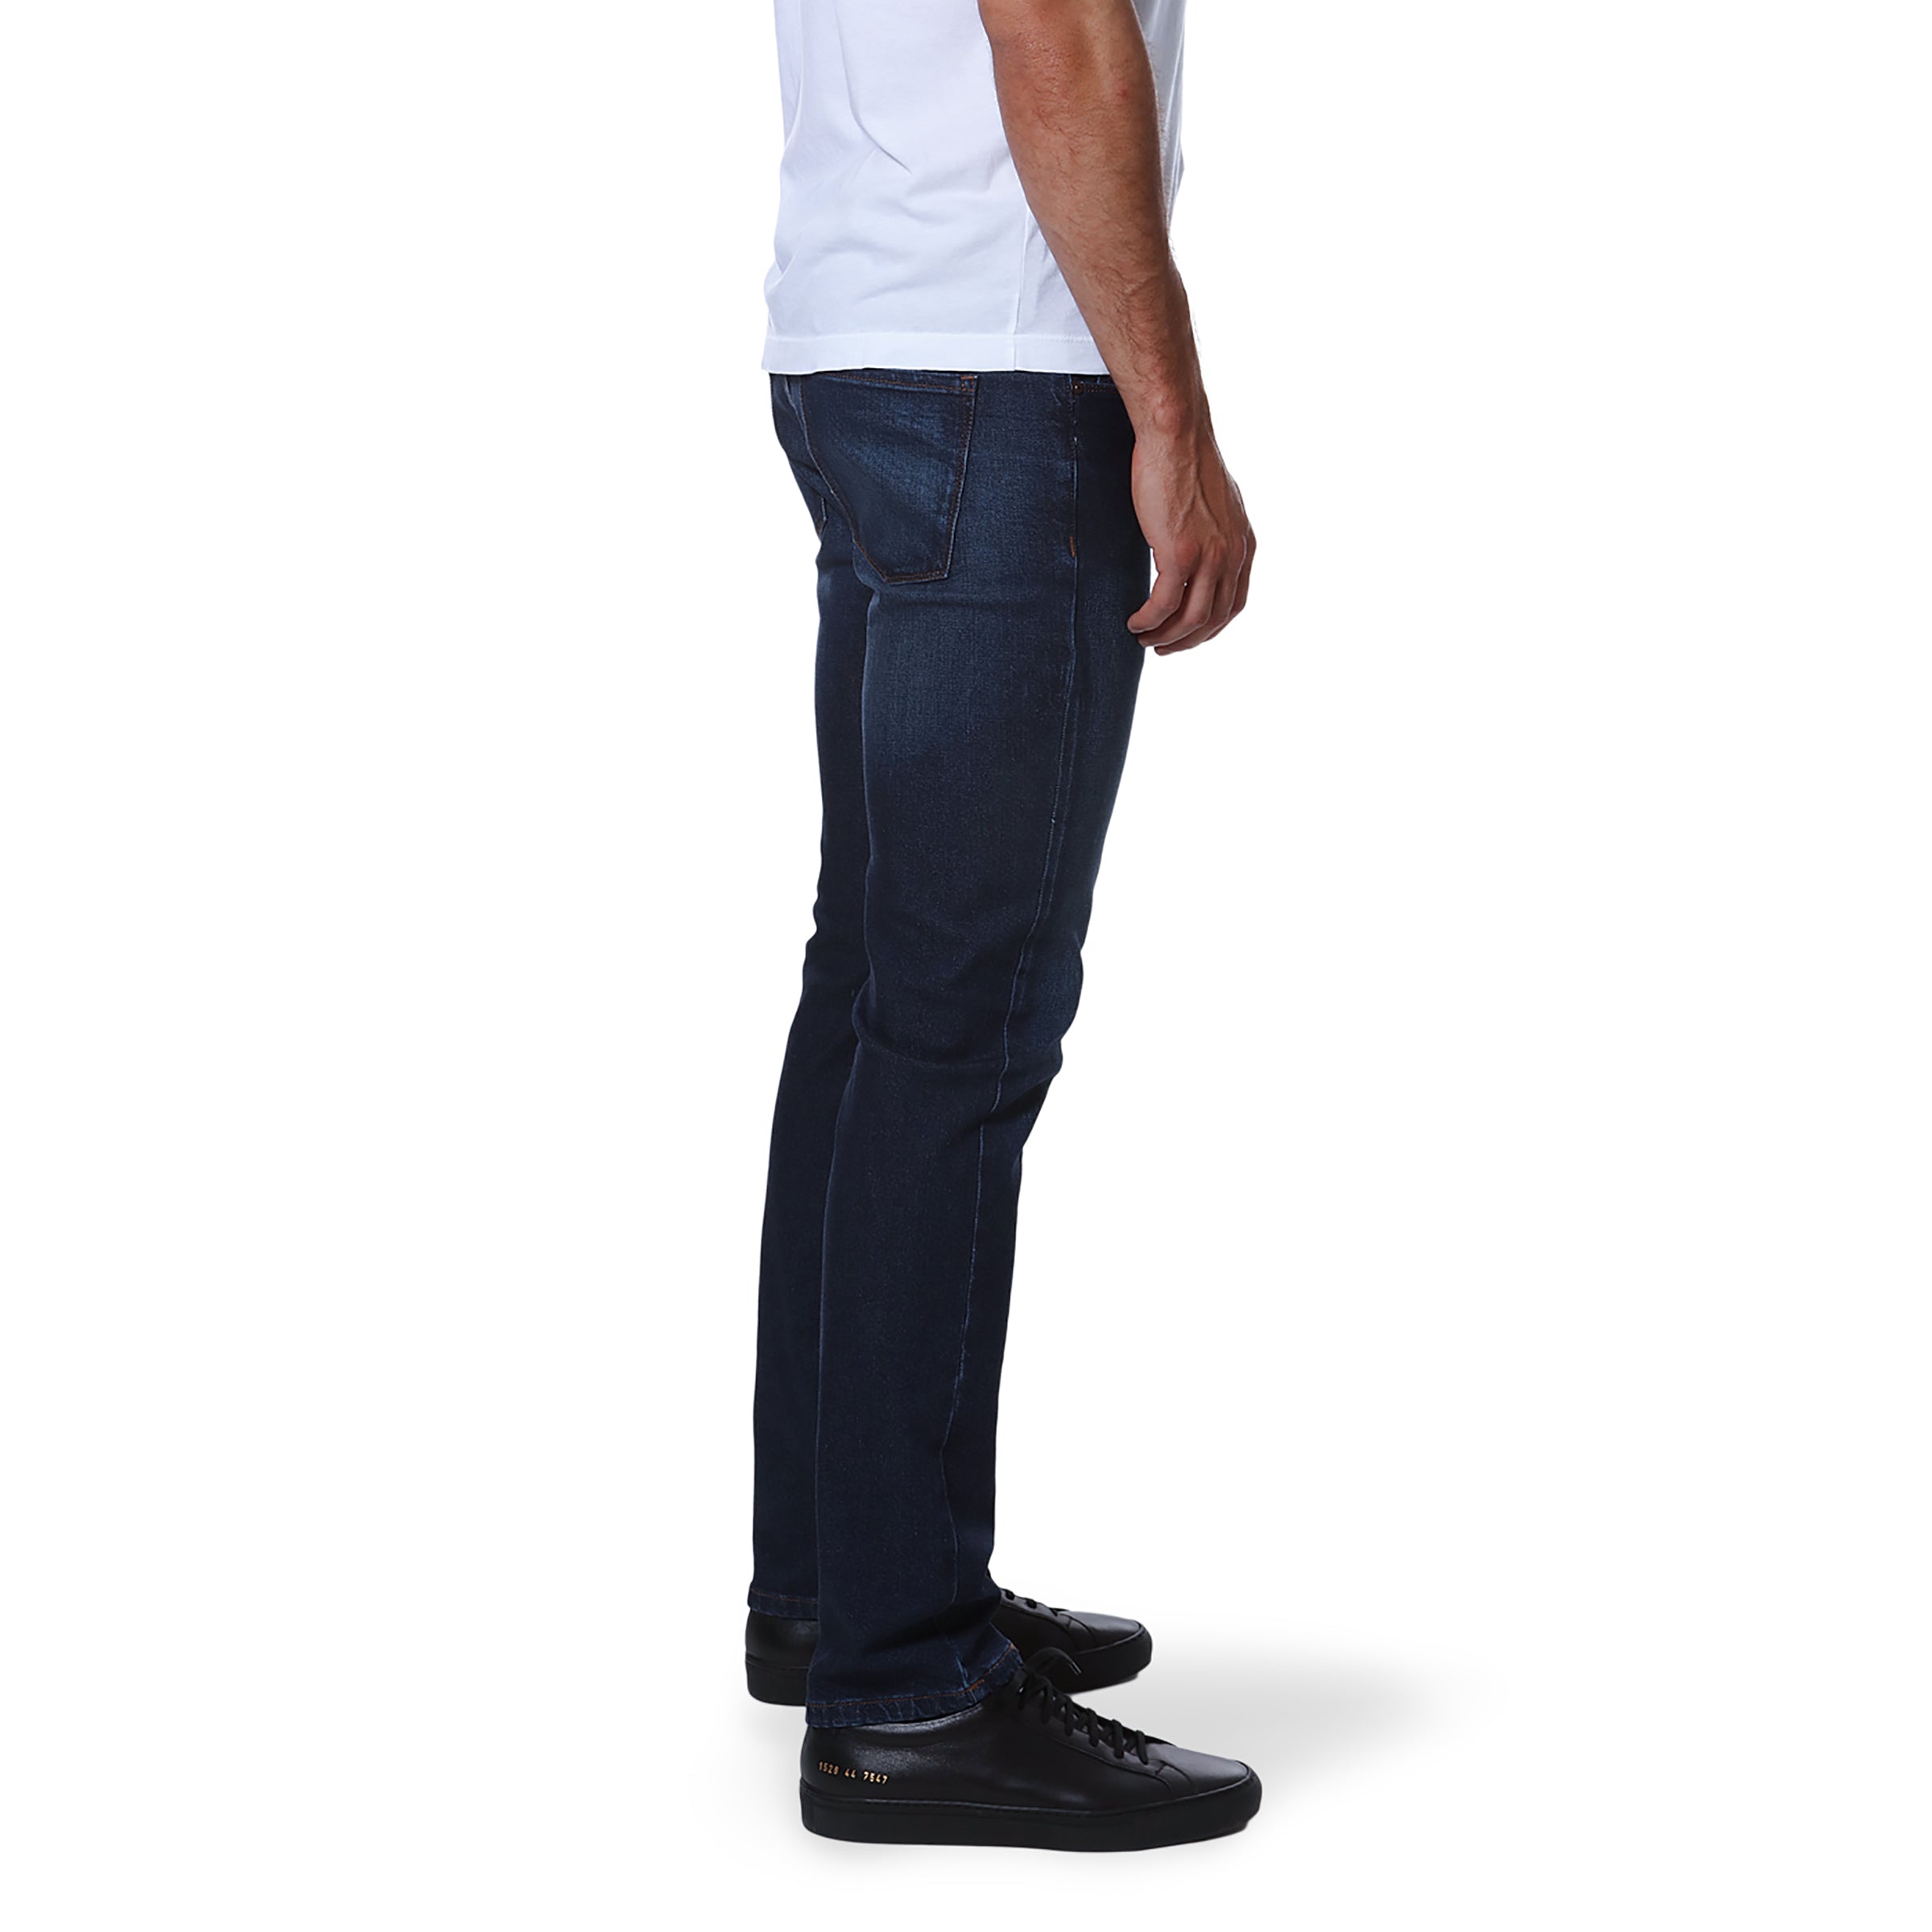 Men wearing Bleu  Médium/Foncé Slim Benson Jeans